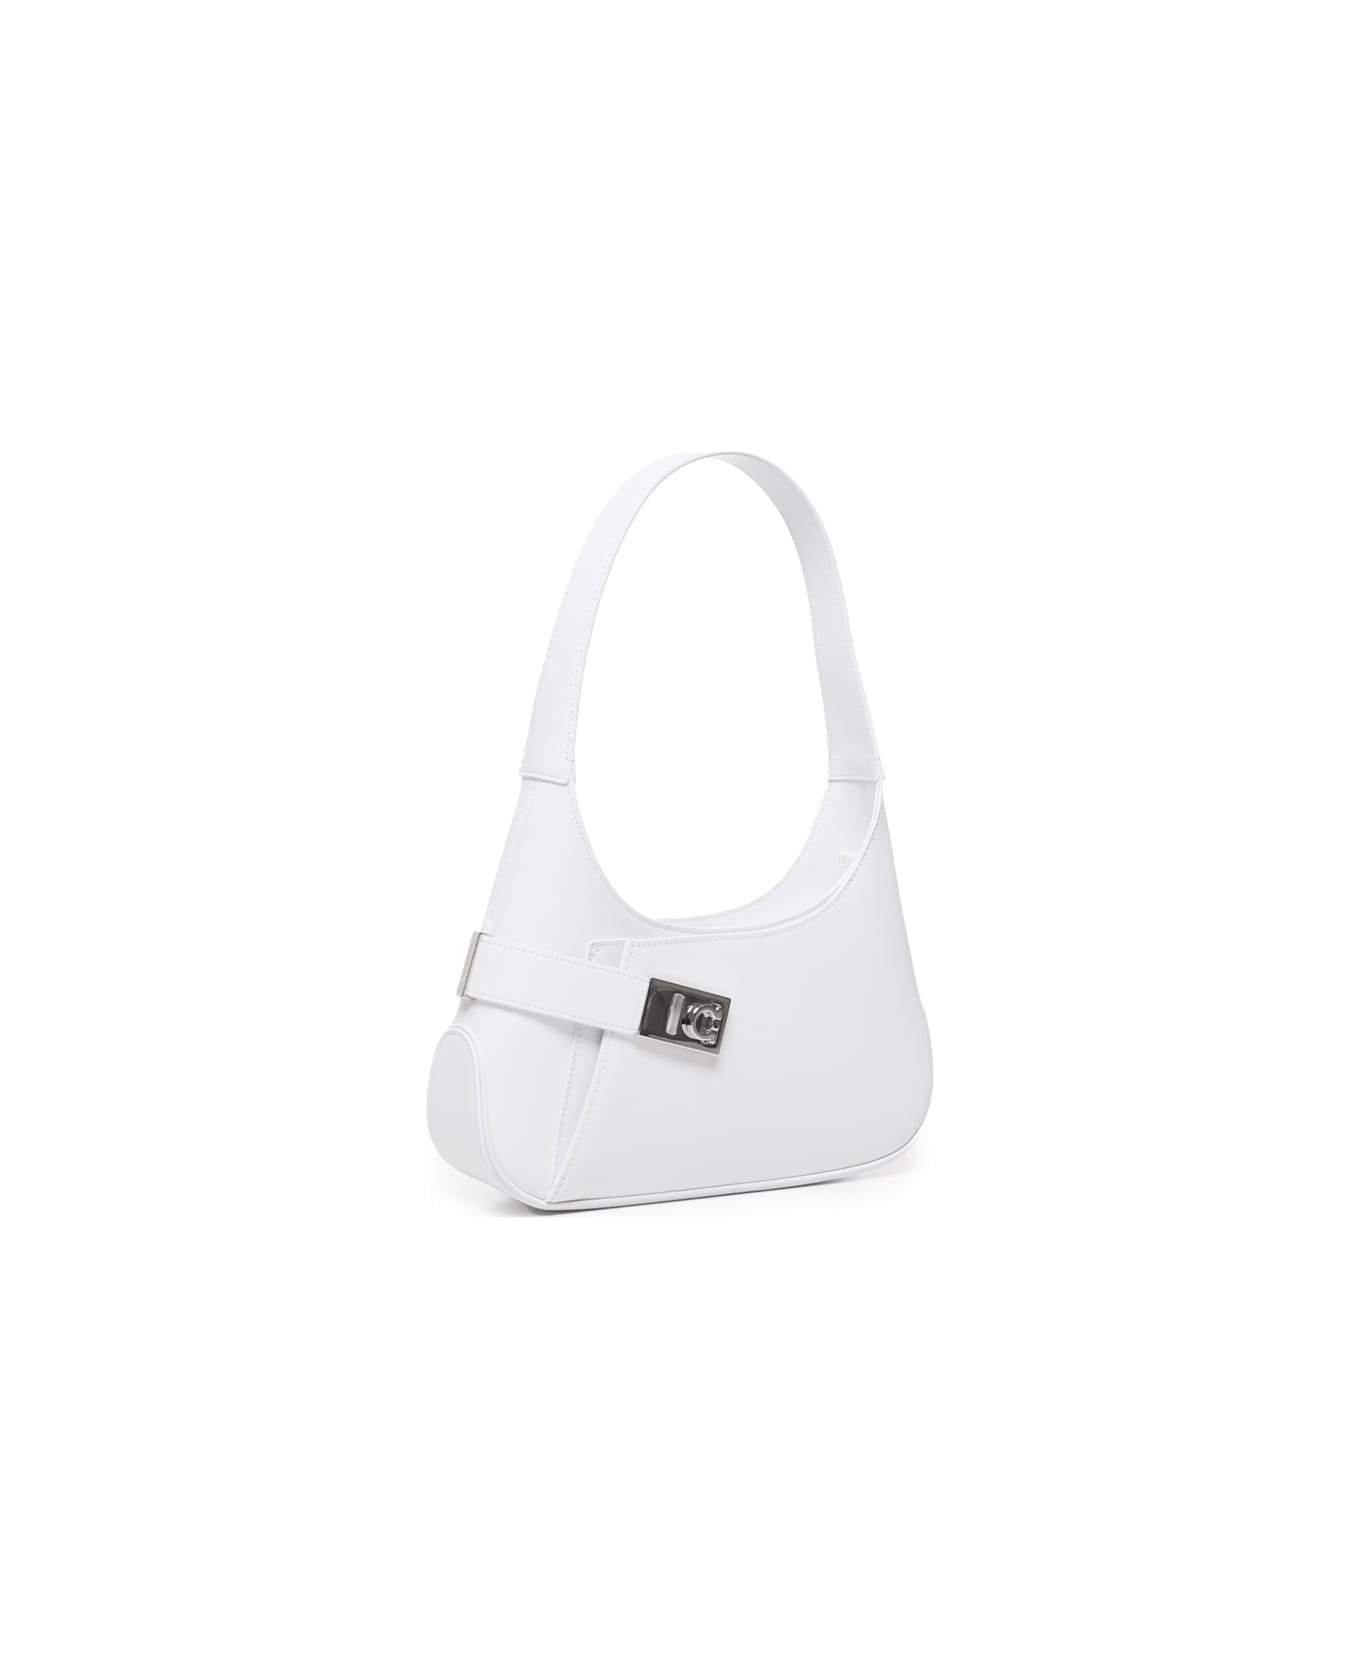 Ferragamo Medium Leather Shoulder Bag - White